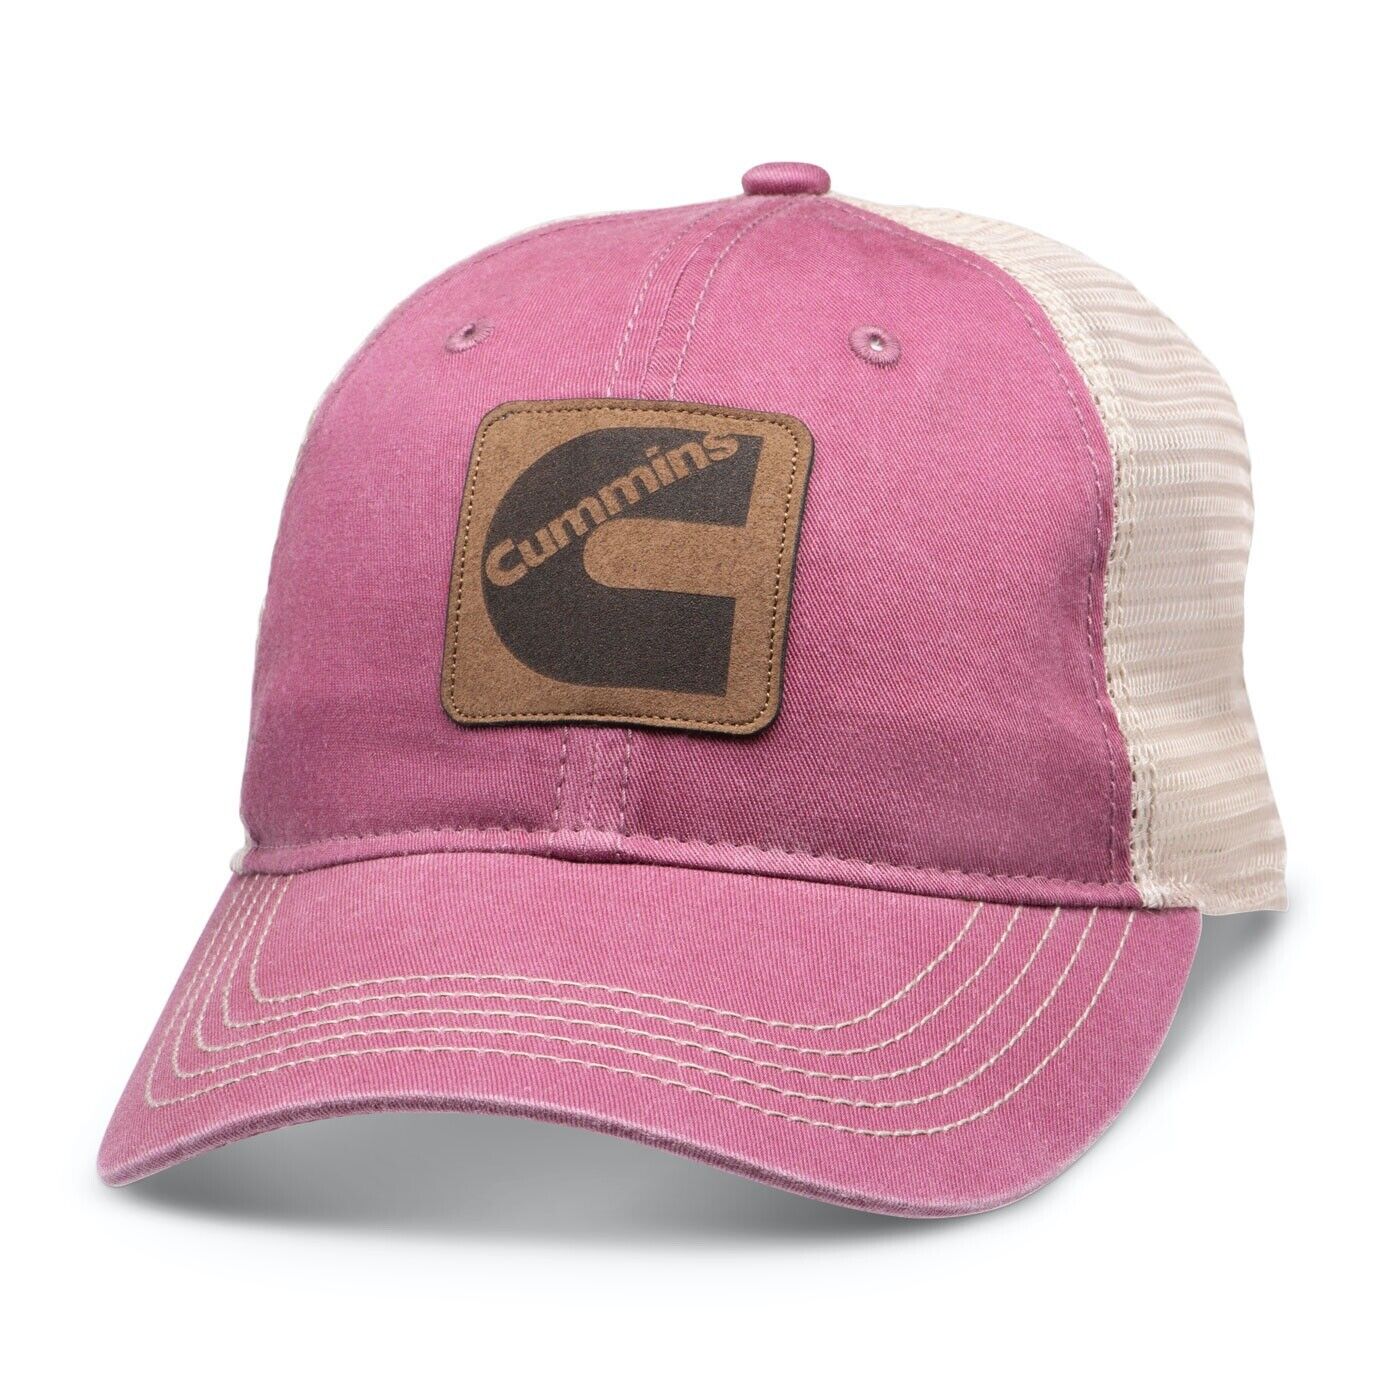 Pink Cummins Trucker Hat Mesh Cap Pink Ladies Girl Snap Back